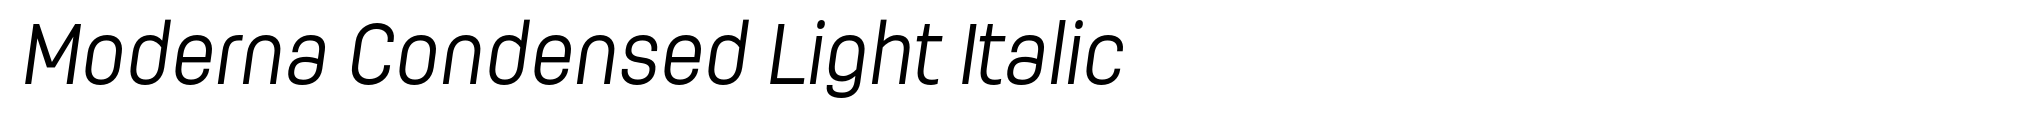 Moderna Condensed Light Italic image